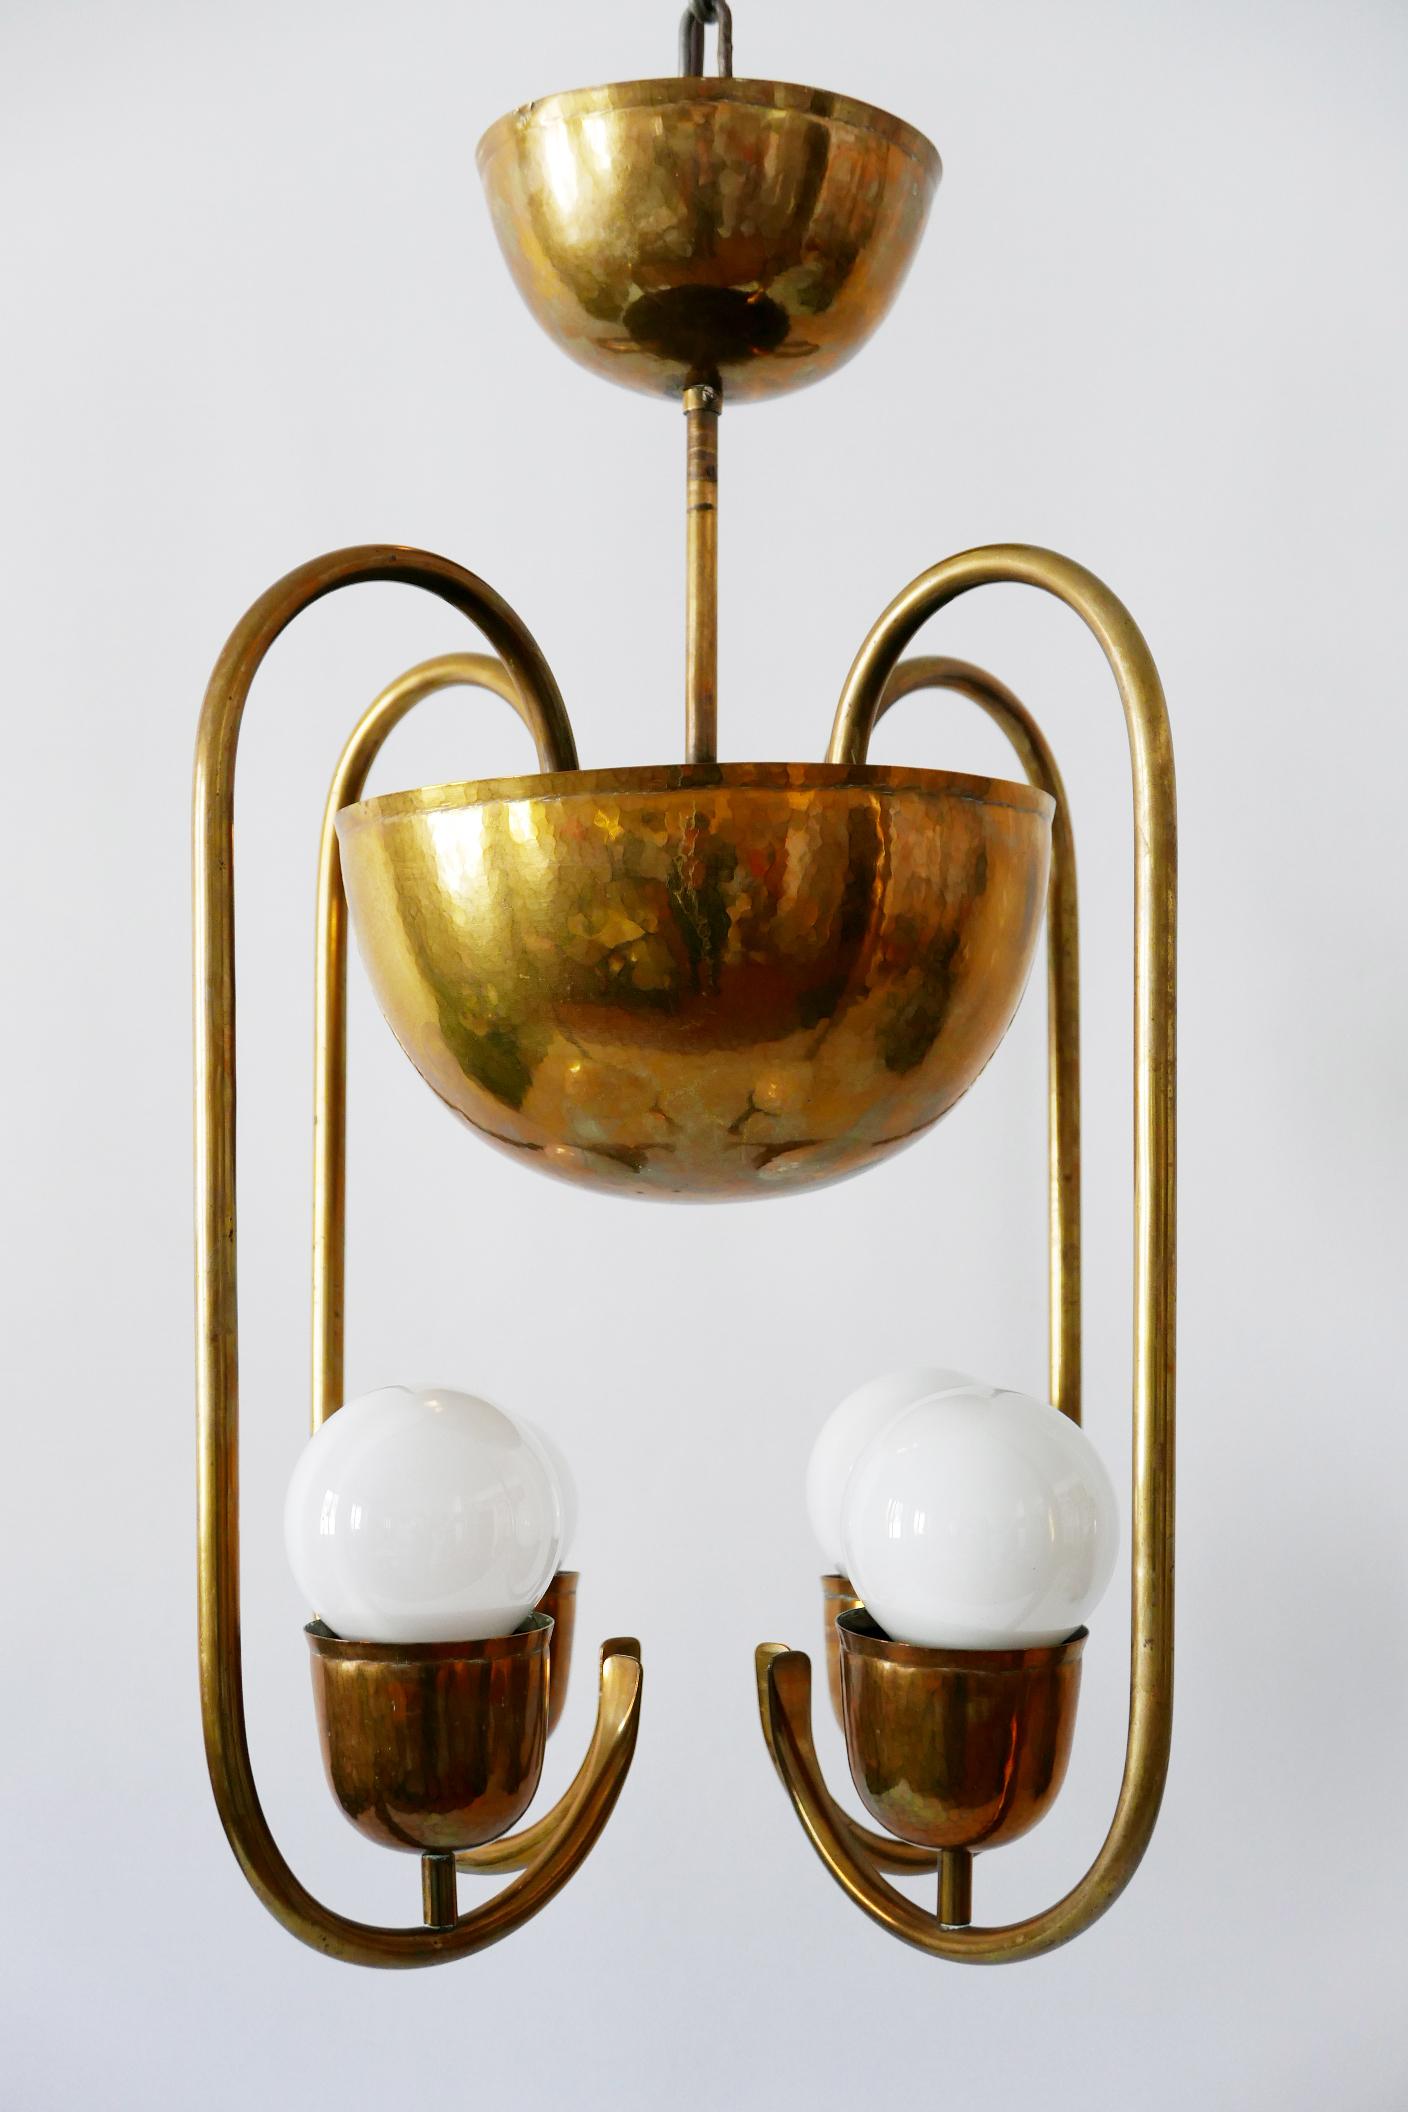 Unique Bauhaus Art Deco Brass Chandelier or Pendant Lamp by Hayno Focken 1930s For Sale 4